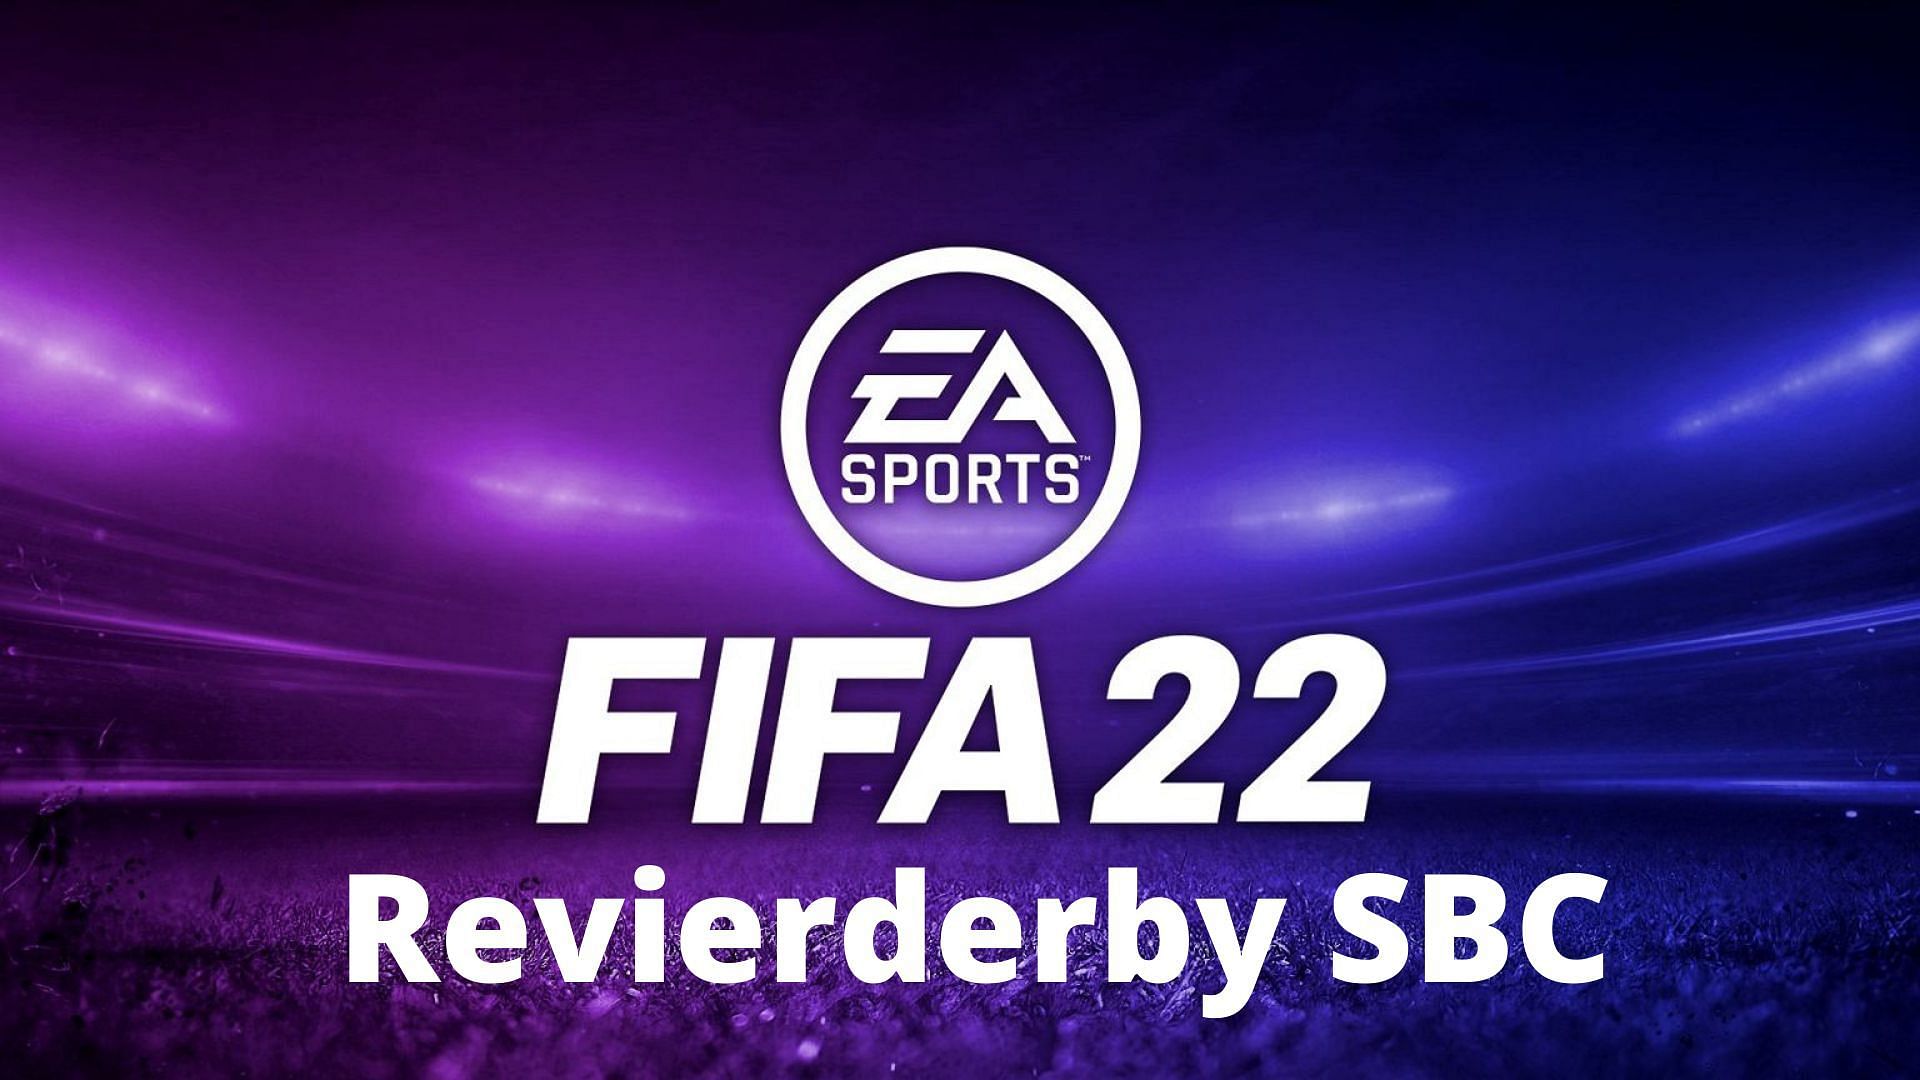 Revierderby SBC has gone live in FIFA 22 Ultimate Team (Image via Sportkseeda)